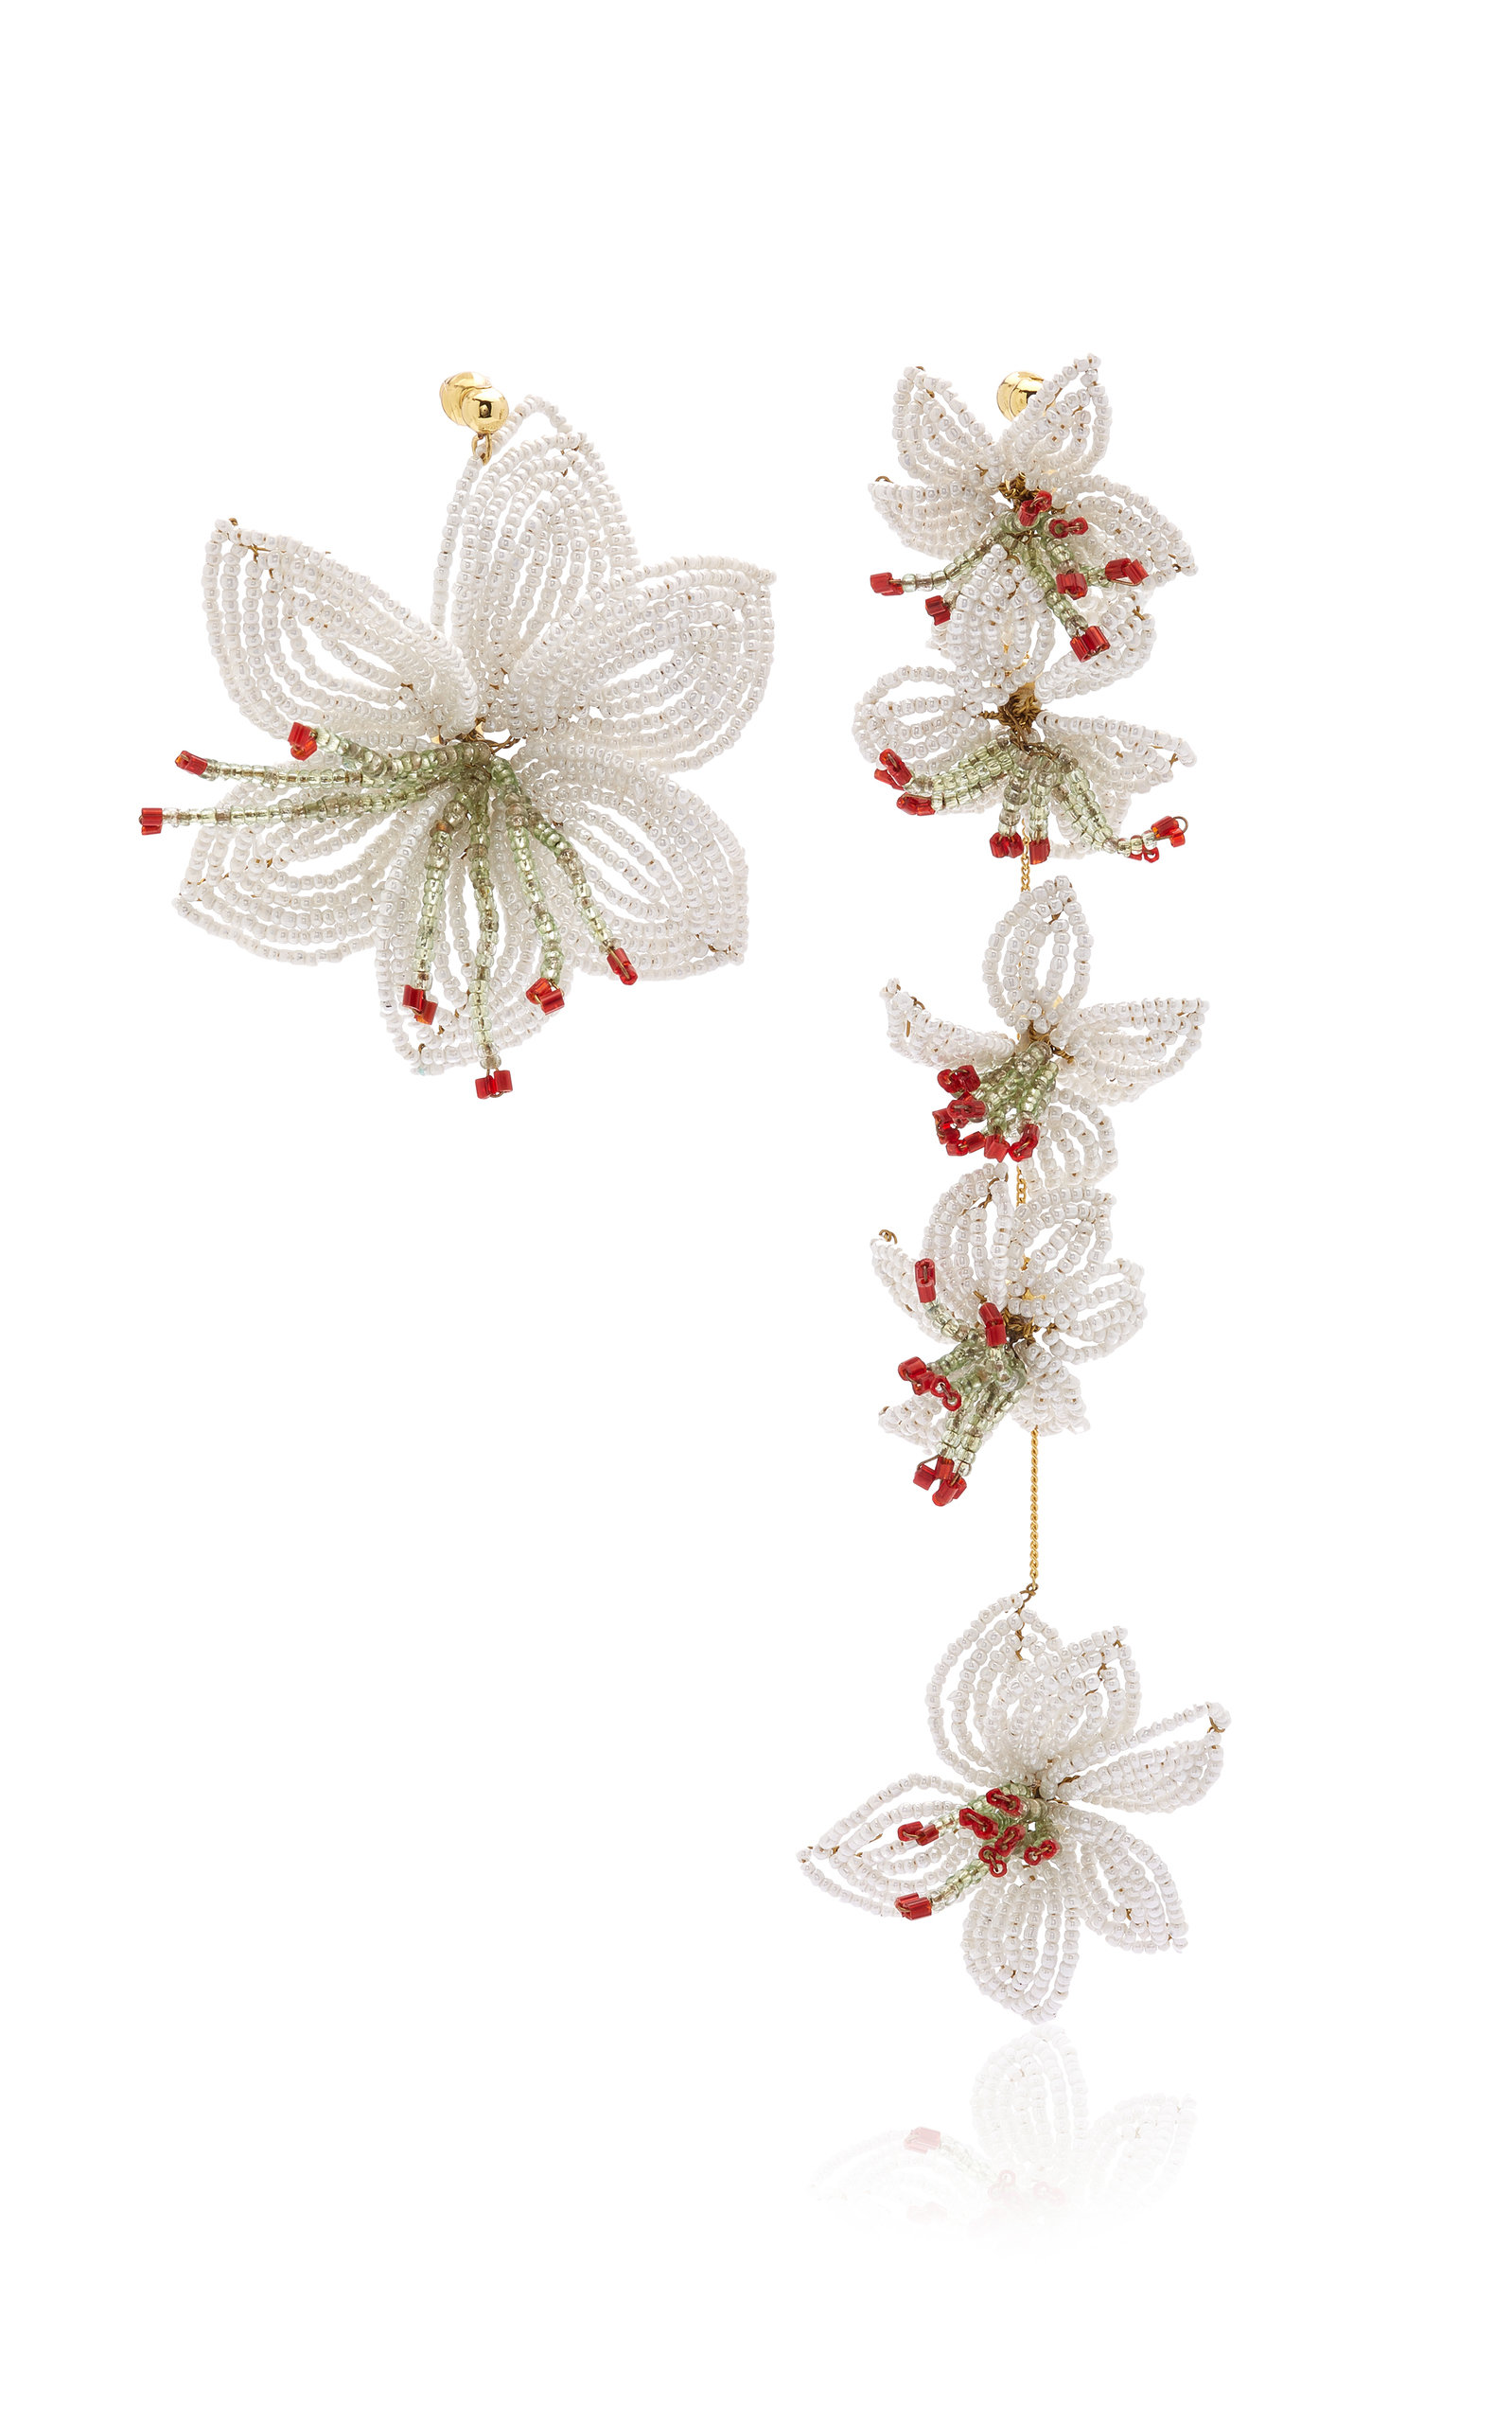 Cult Gaia - Women's Lily Beaded Flower Earrings - White - Moda Operandi - Gifts For Her